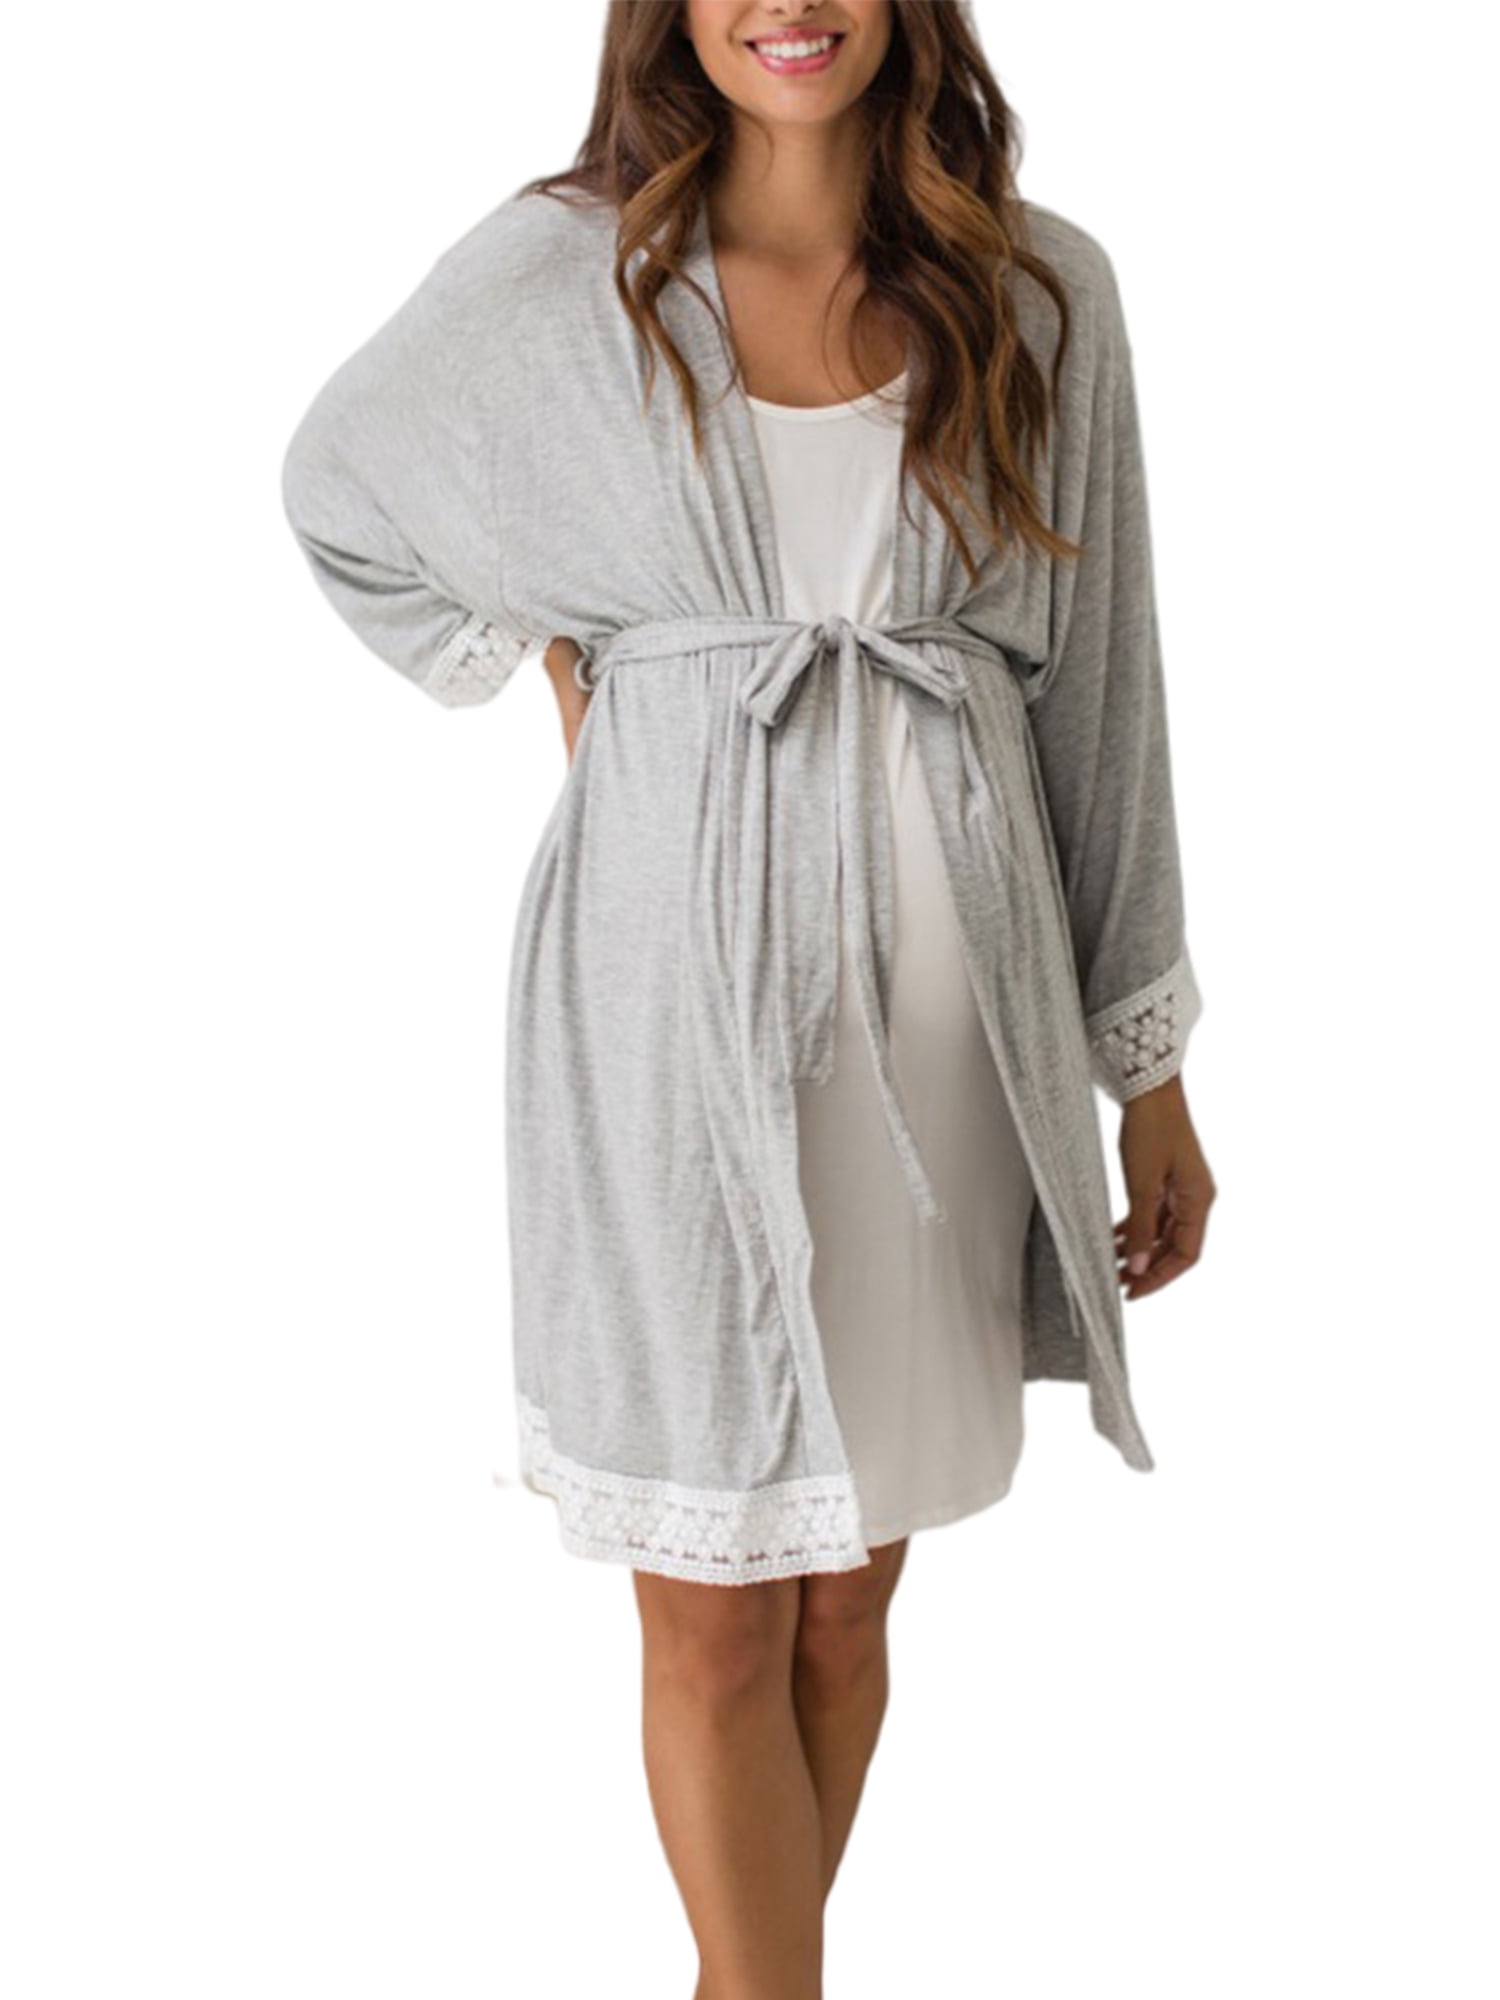 Ritera Womens Maternity Nursing Nightgown Dress Soft Pregnancy Nightdress for Breastfeeding Sleepwear Nightie,S-XL 